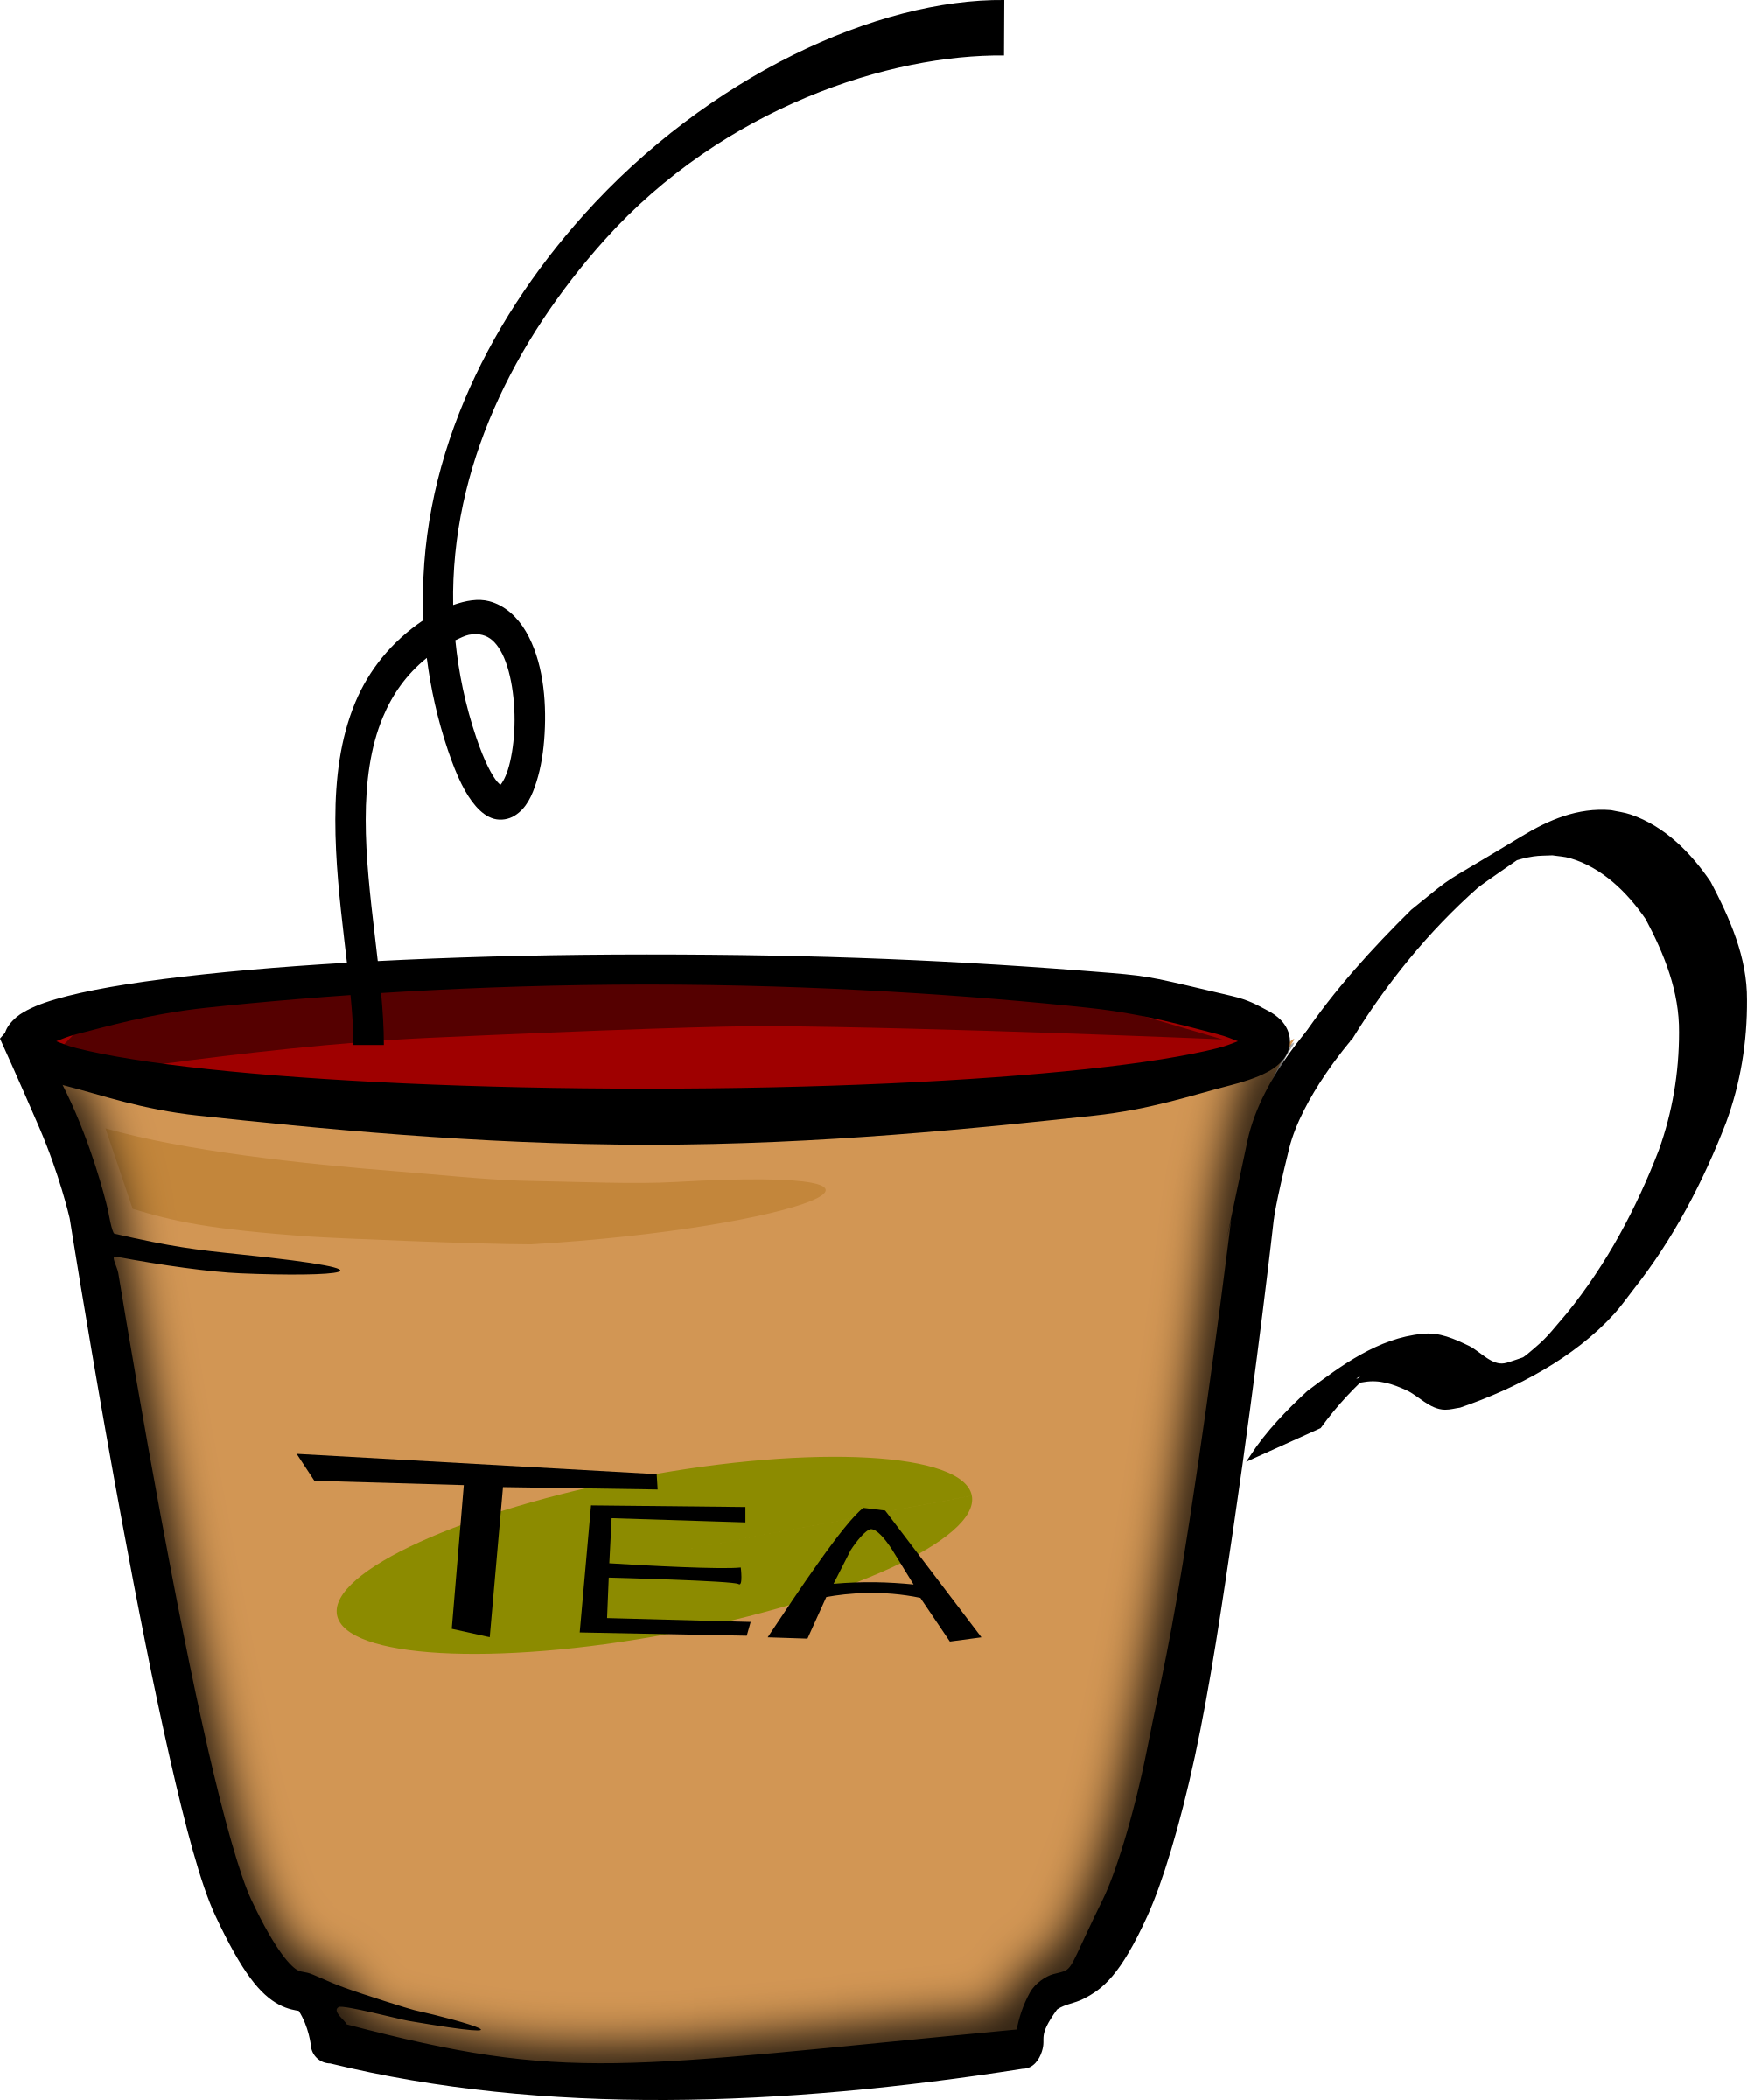 Big Image - Clip Art Of Tea - Png Download (1997x2400), Png Download